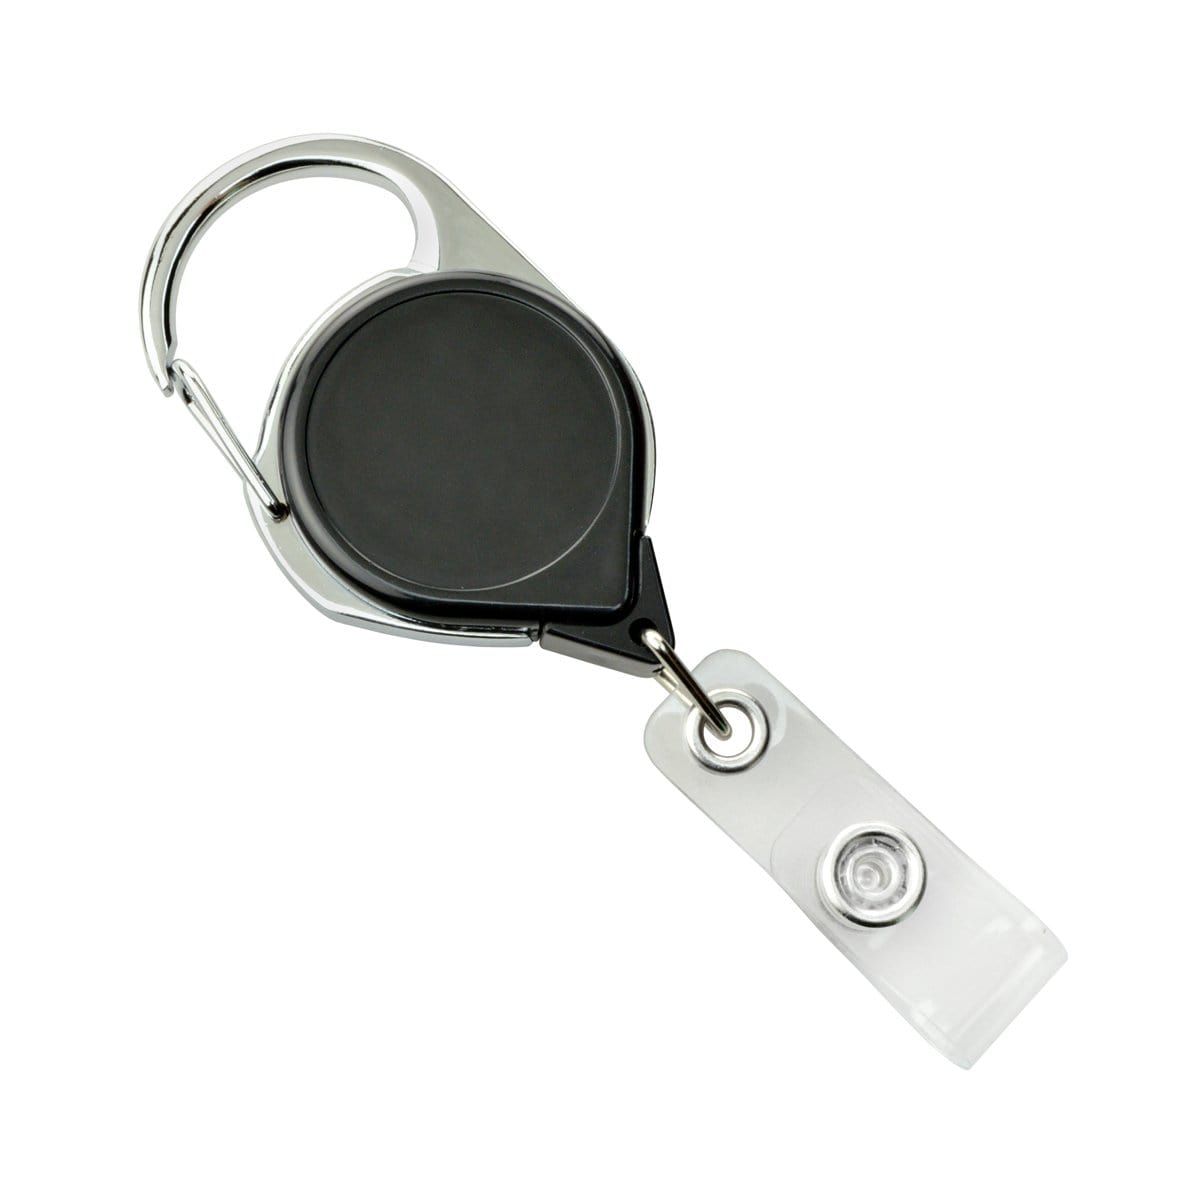 Interchangeable Magnetic Badge Reel White Belt Clip